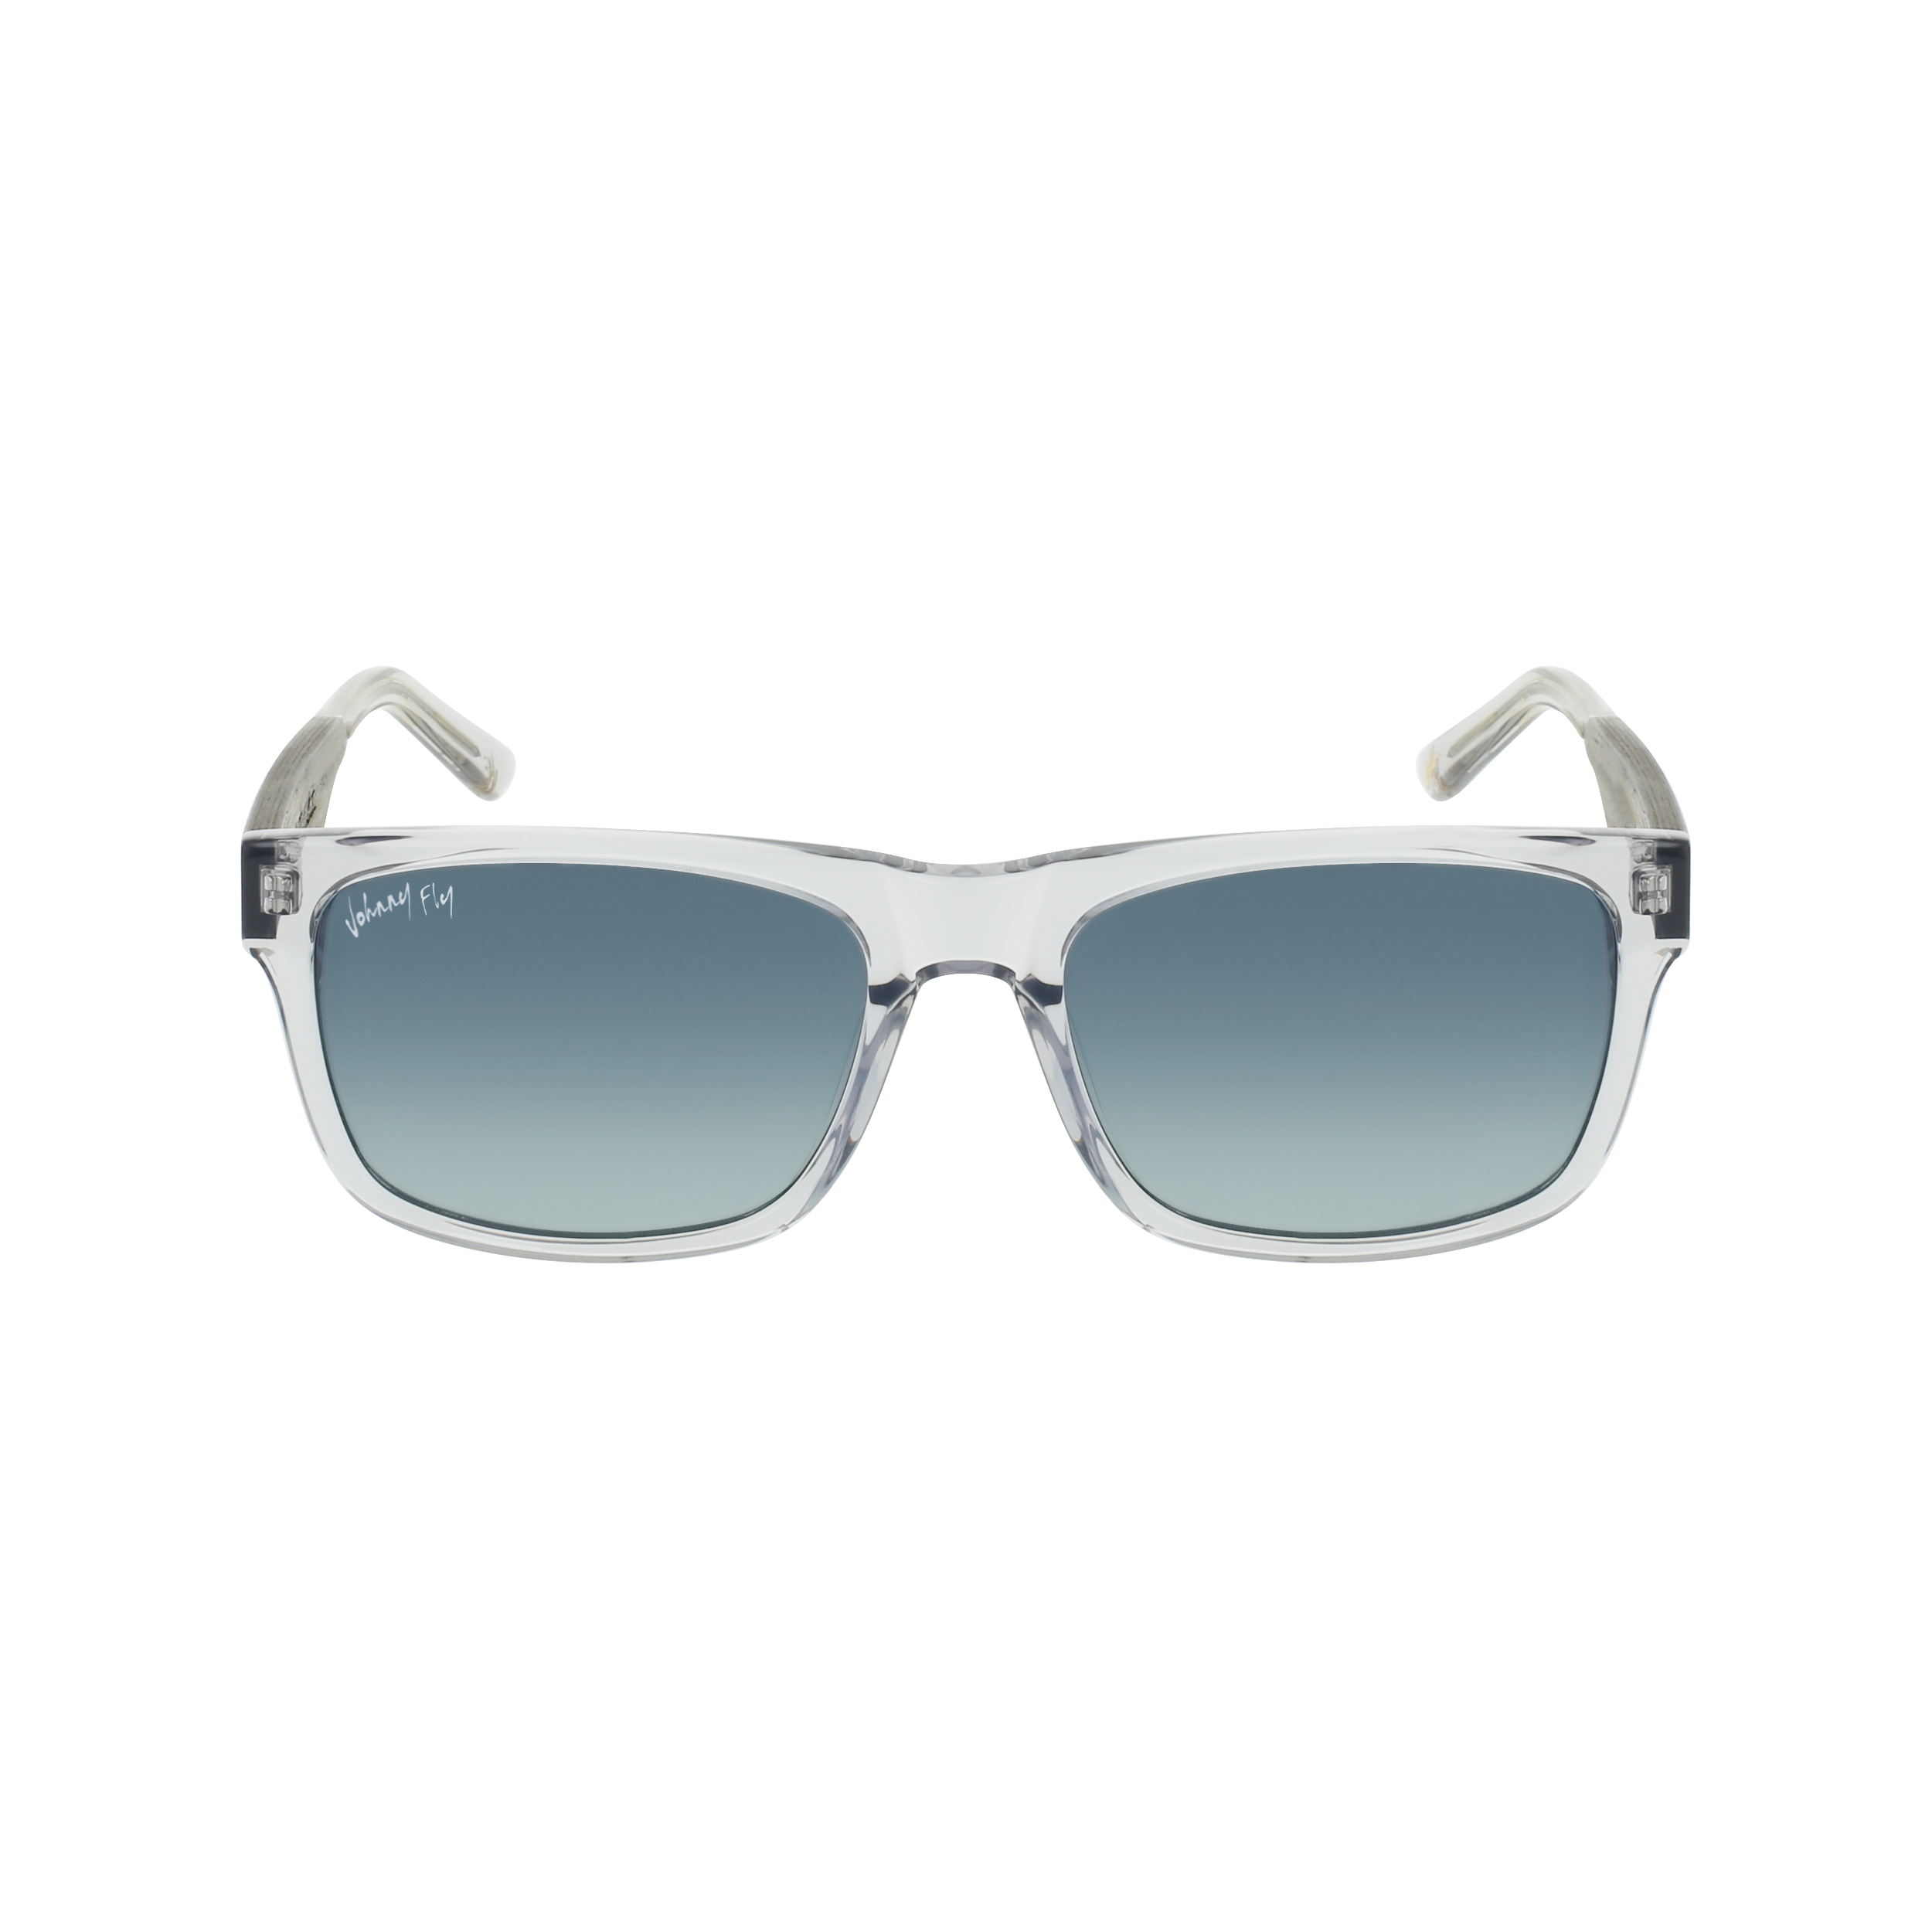 7THIRTY7 - Tinted Crystal - Sunglasses - Johnny Fly Eyewear | 